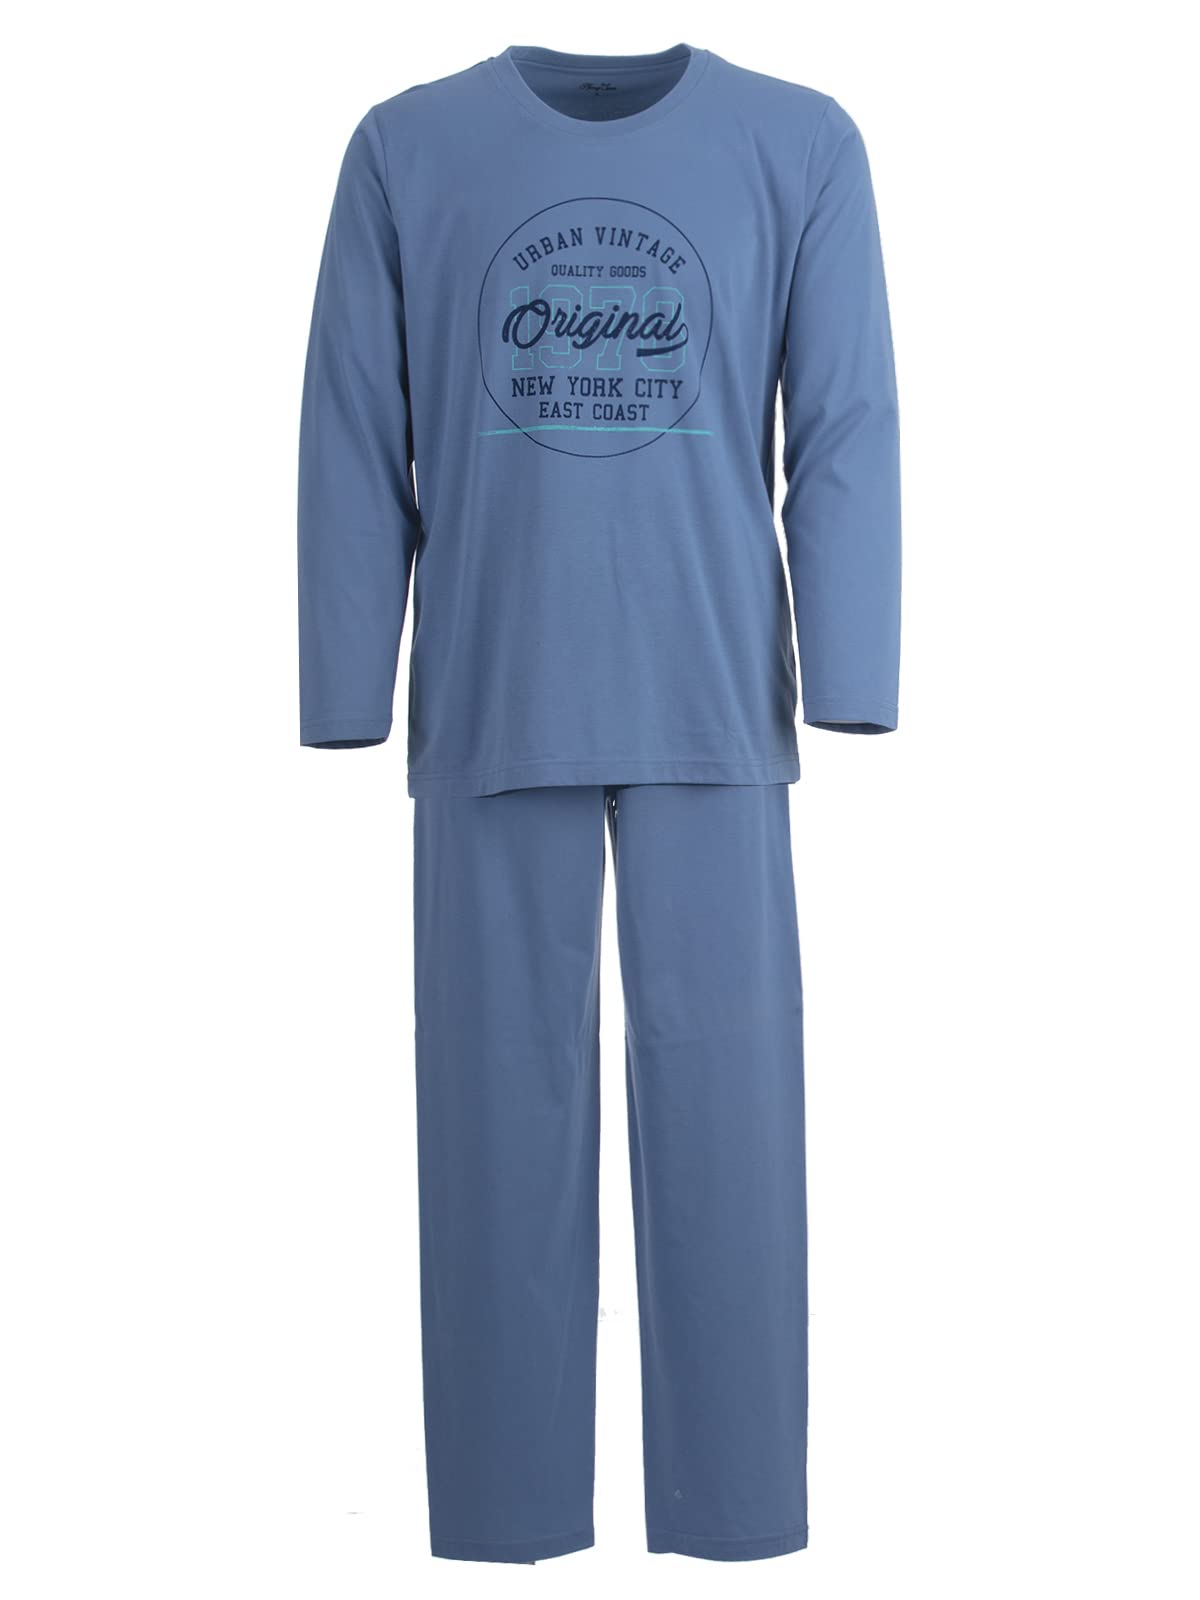 LUCKY Herren Pyjama lang Schlafanzug Pyjama Set Druck Motiv, Farbe:Blau, Größe:XL